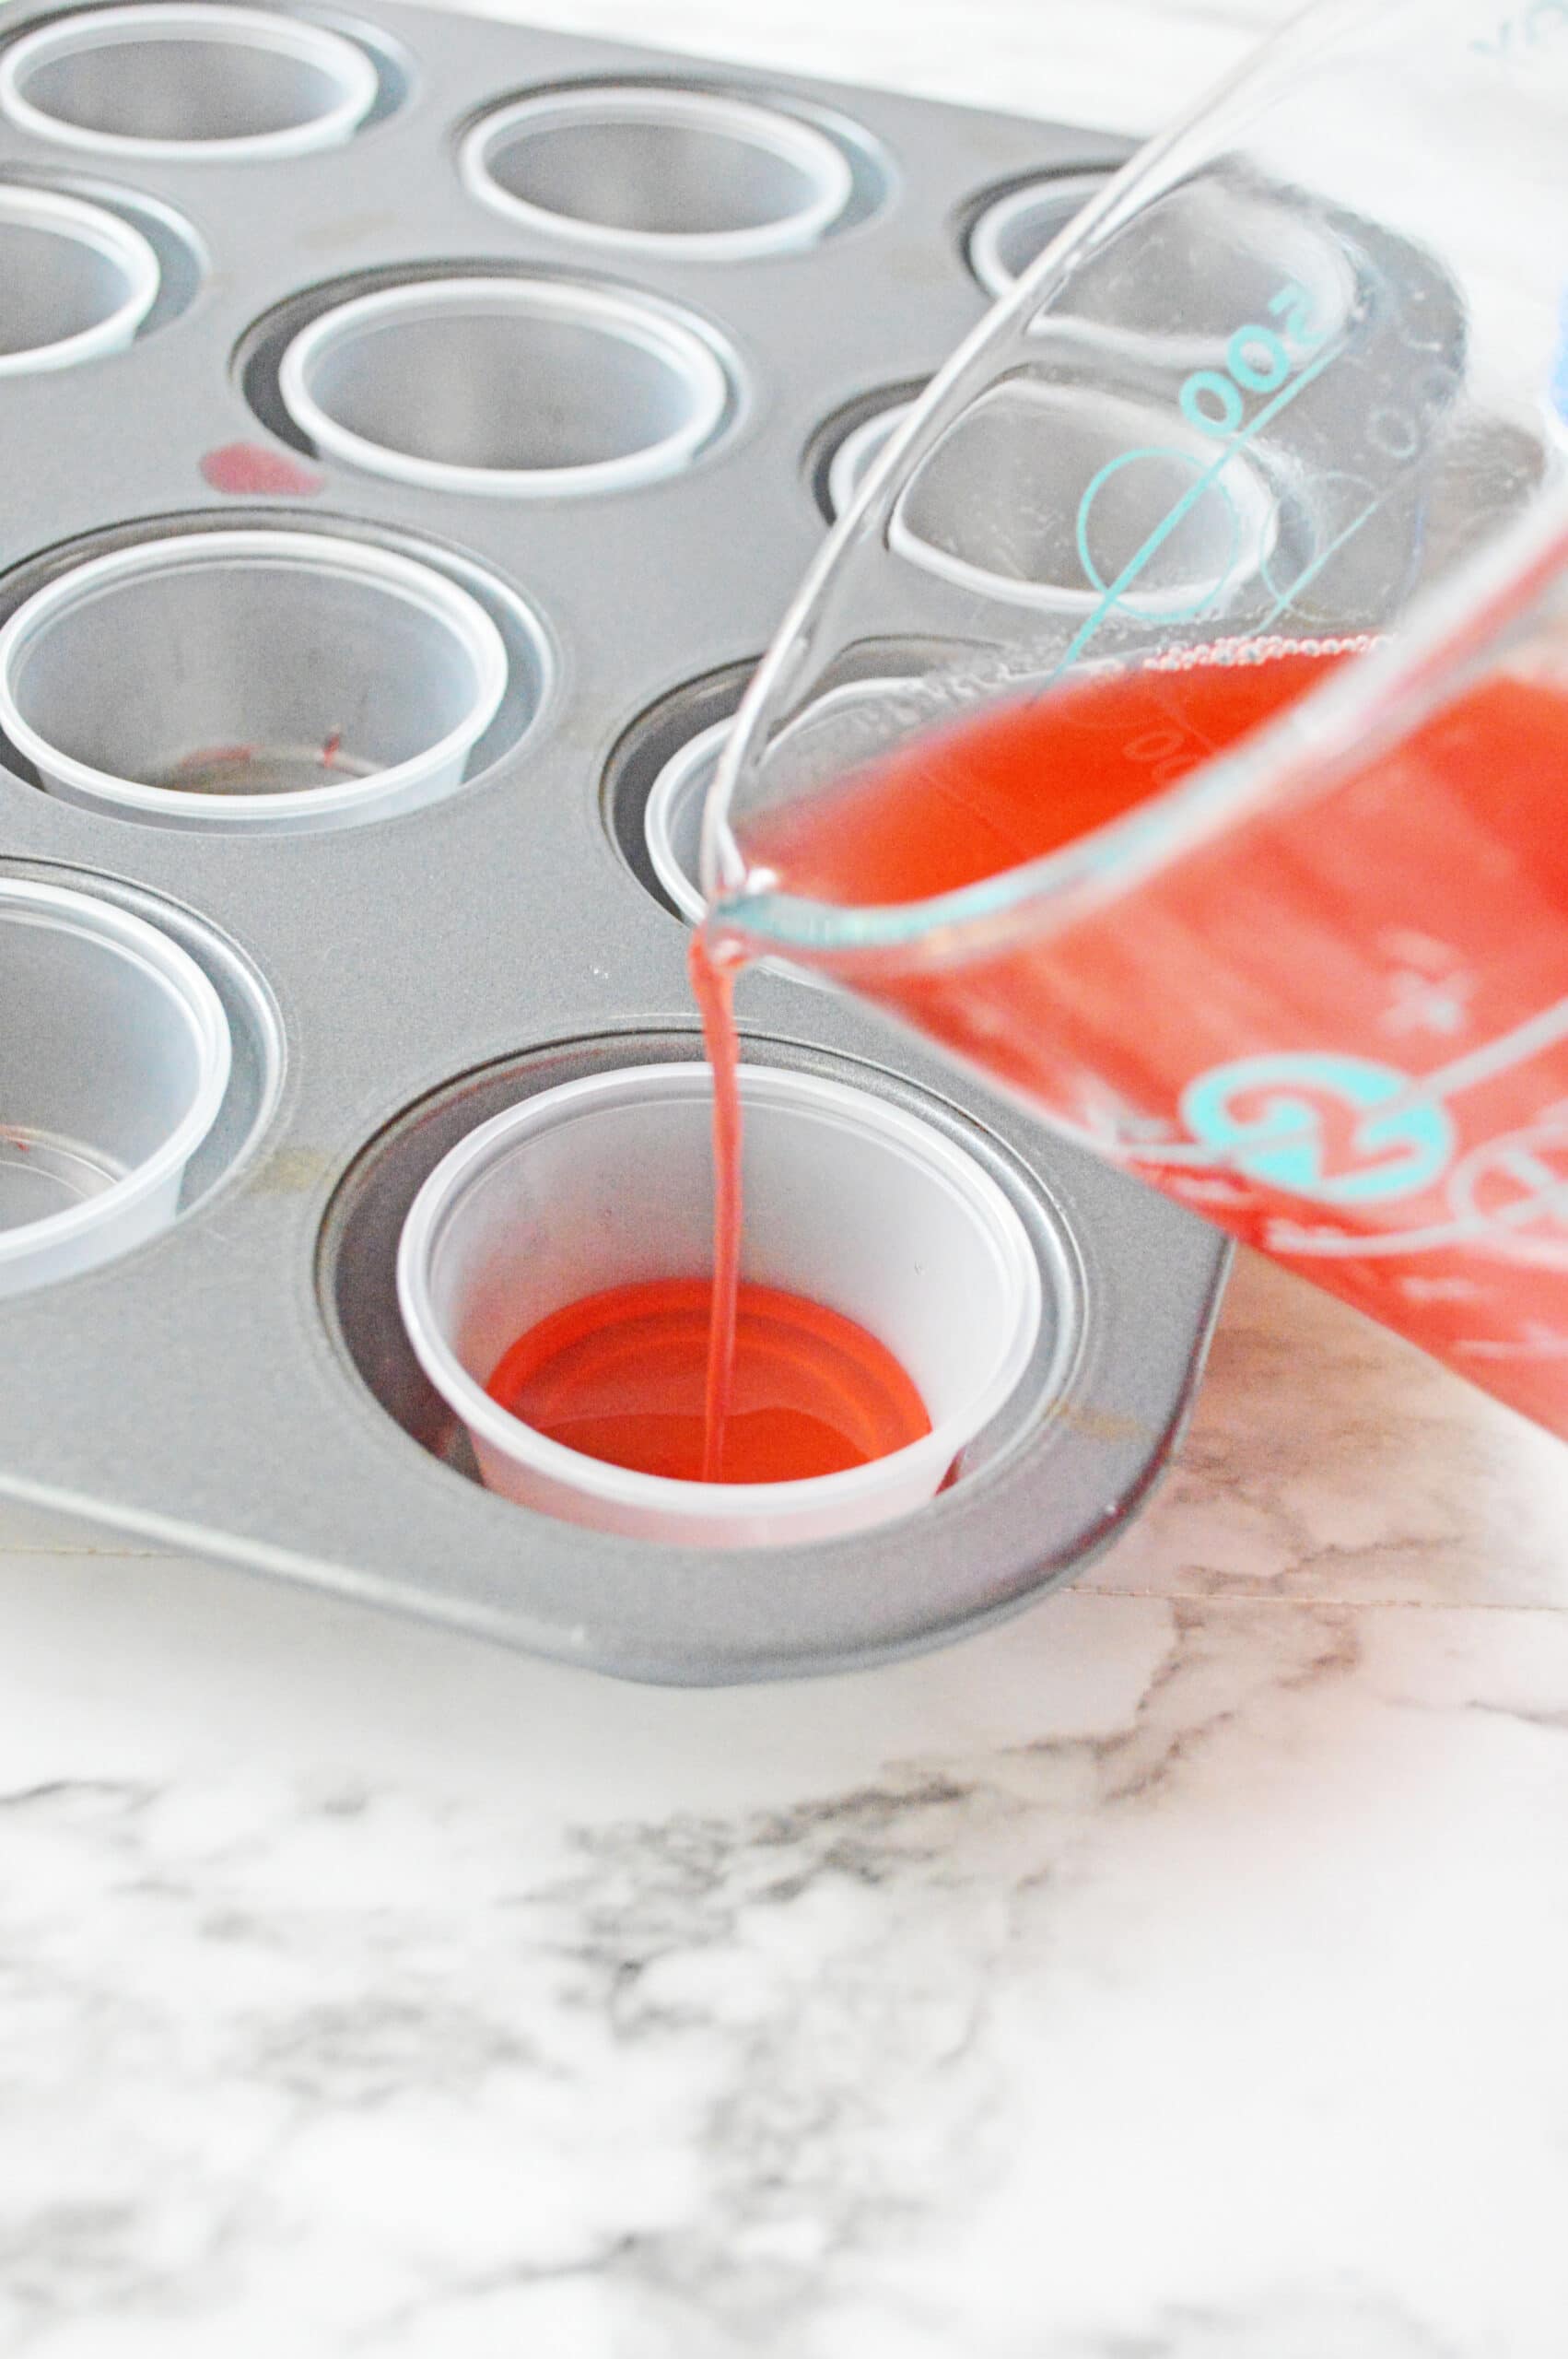 Pouring jello mixture into plastic shot cups